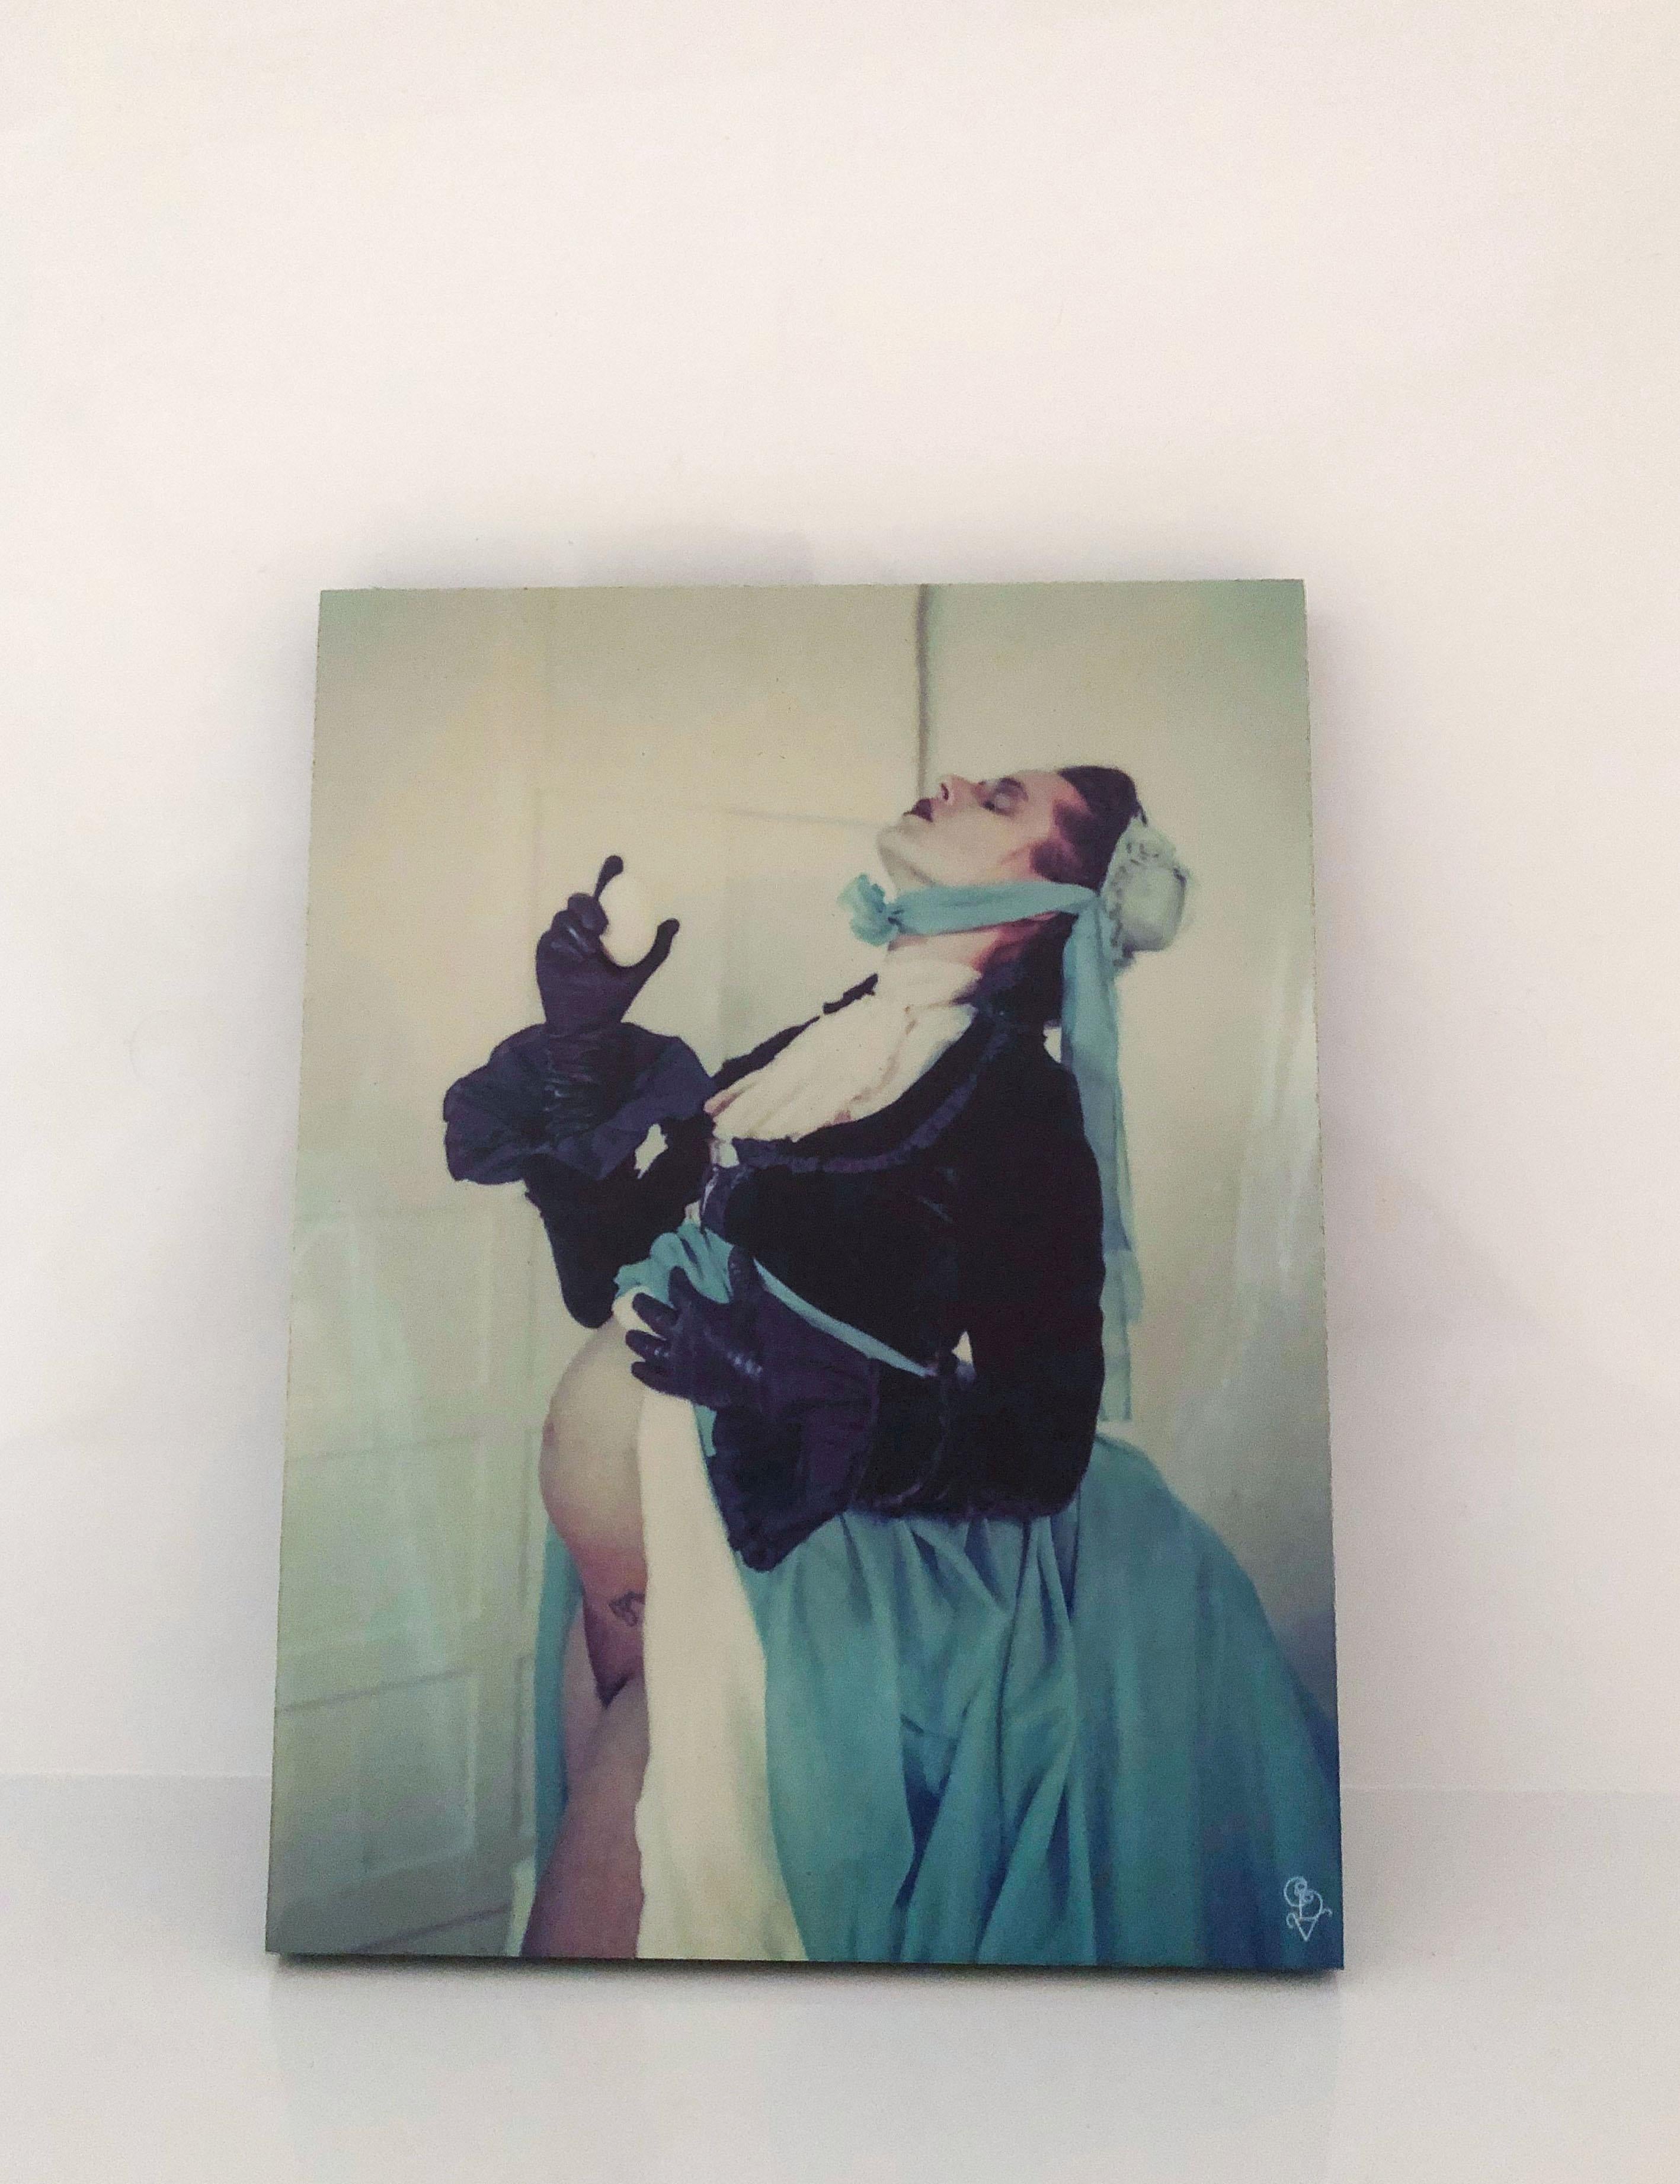 Egg (Odd Stories) - Polaroid, Contemporary, 21st Century, Color, Pregnant - Photograph by Carmen de Vos